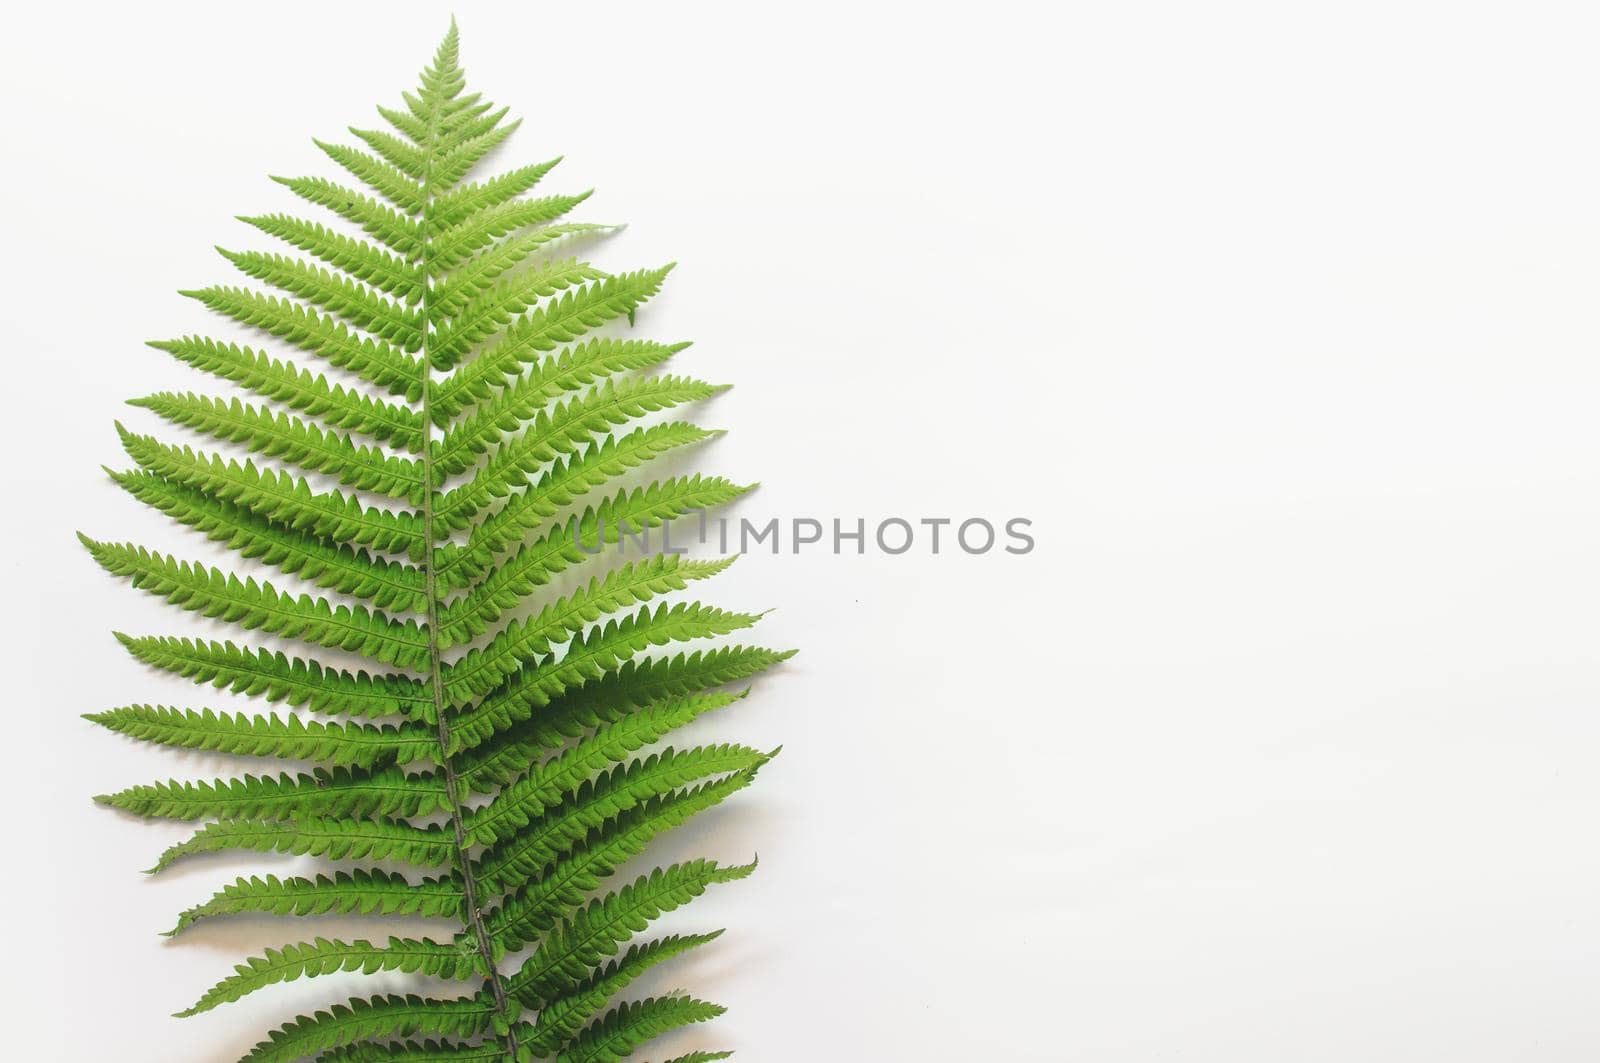 fern leaf on paper background by ozornina